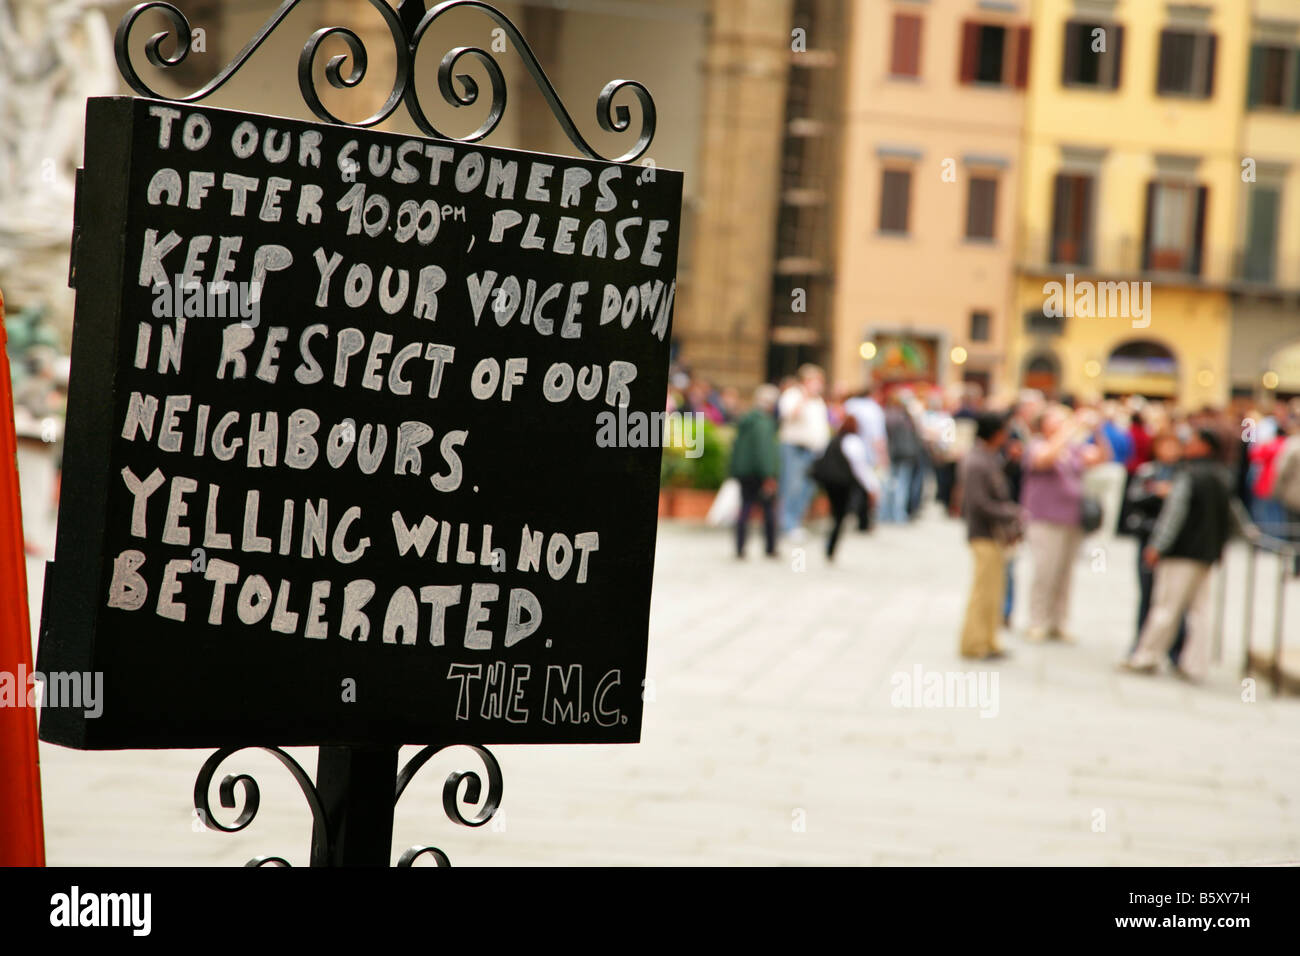 'Quiet please' sign at pavement restaurant, Piazza della Signoria, Florence, Italy. Stock Photo